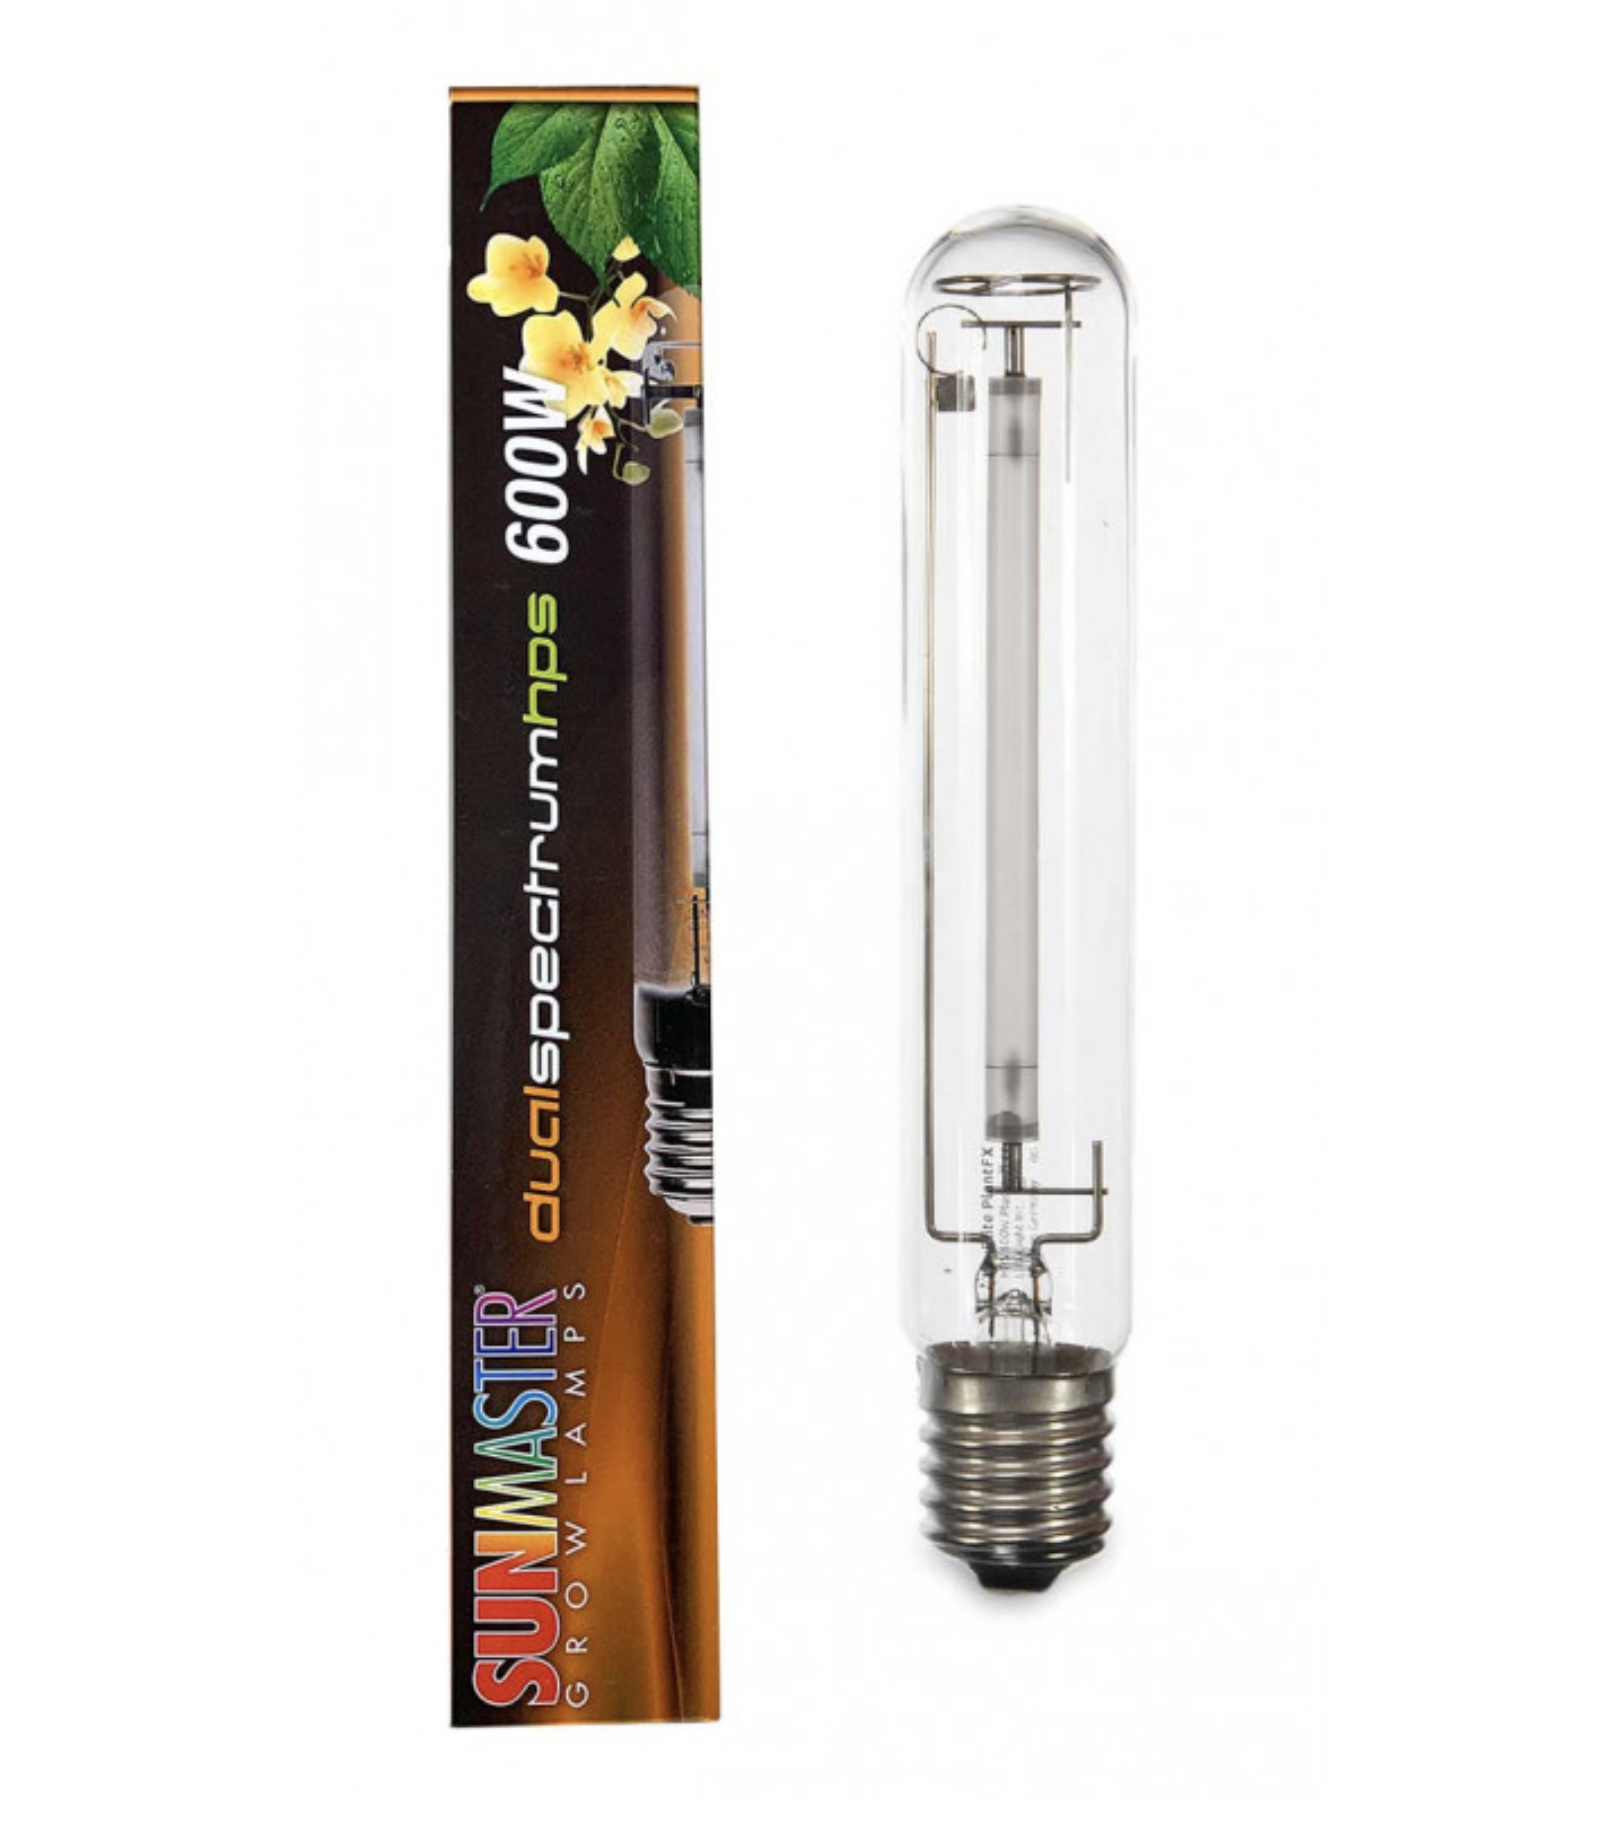 Hydroponics 600w HPS Dual Spectrum Grow & Flower Lamp E40 Light Bulb Hydroponics